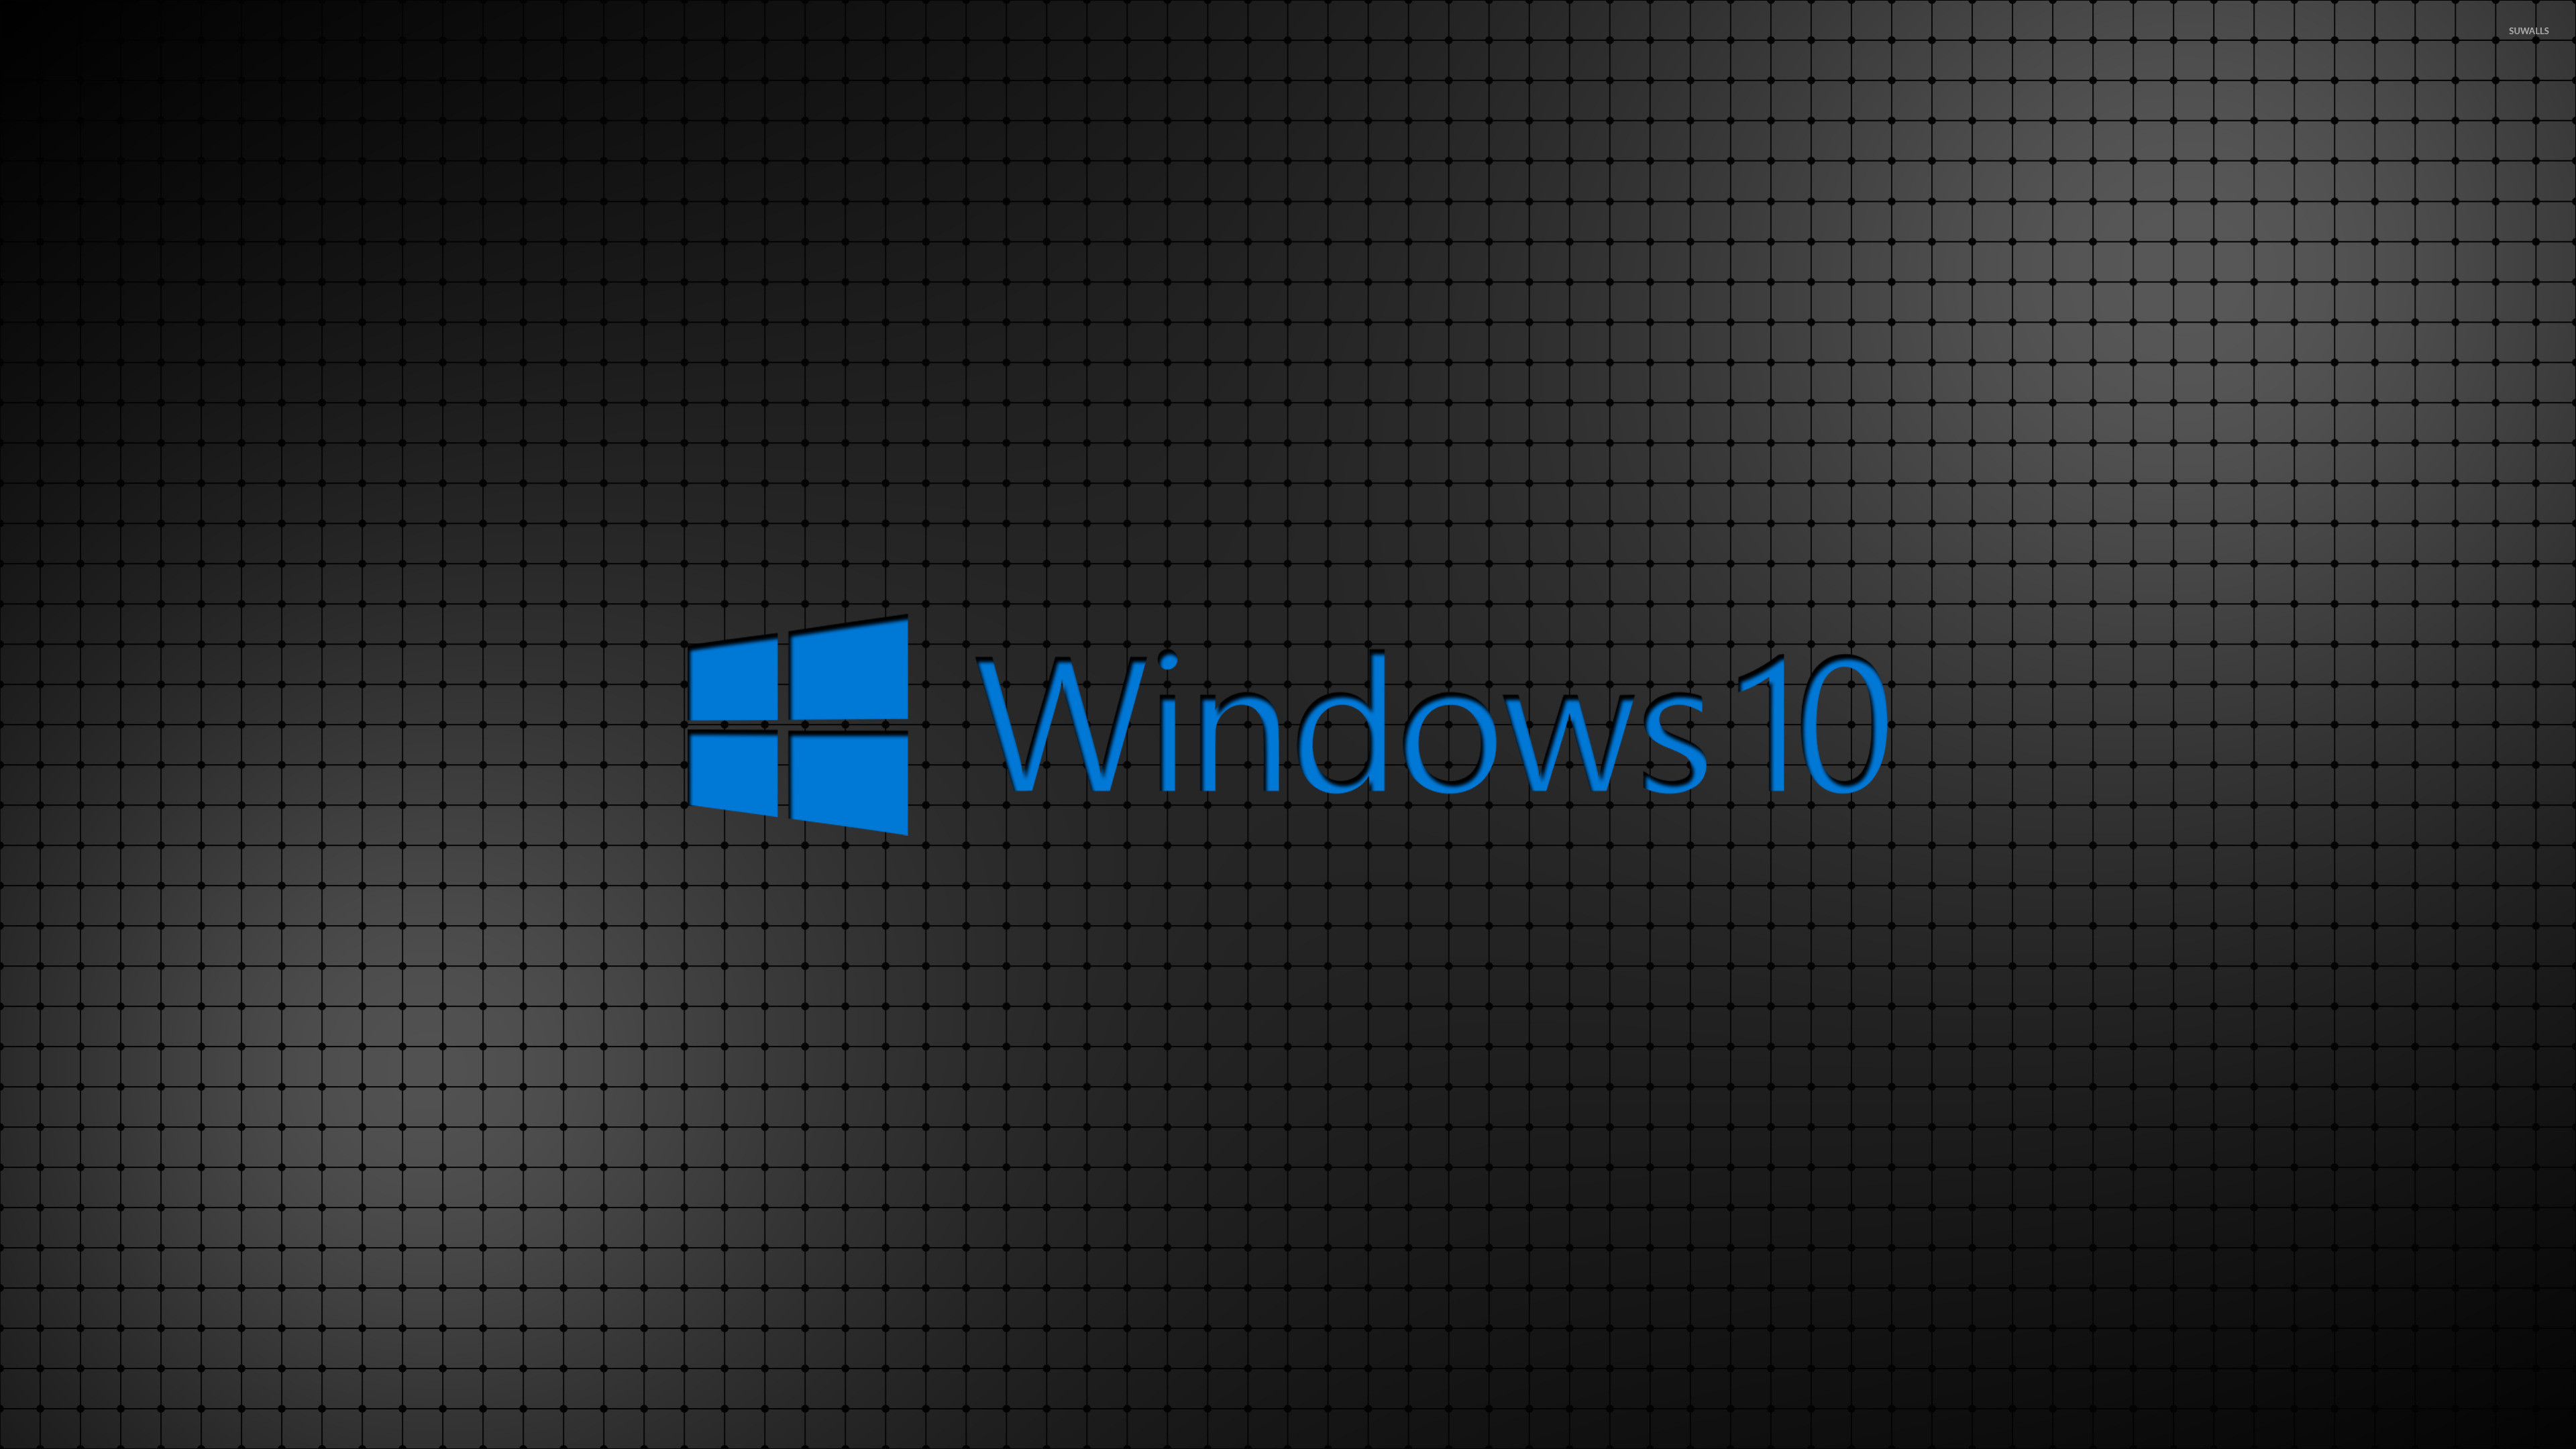 3840x2160 Windows 10 blue text logo on a grid wallpaper